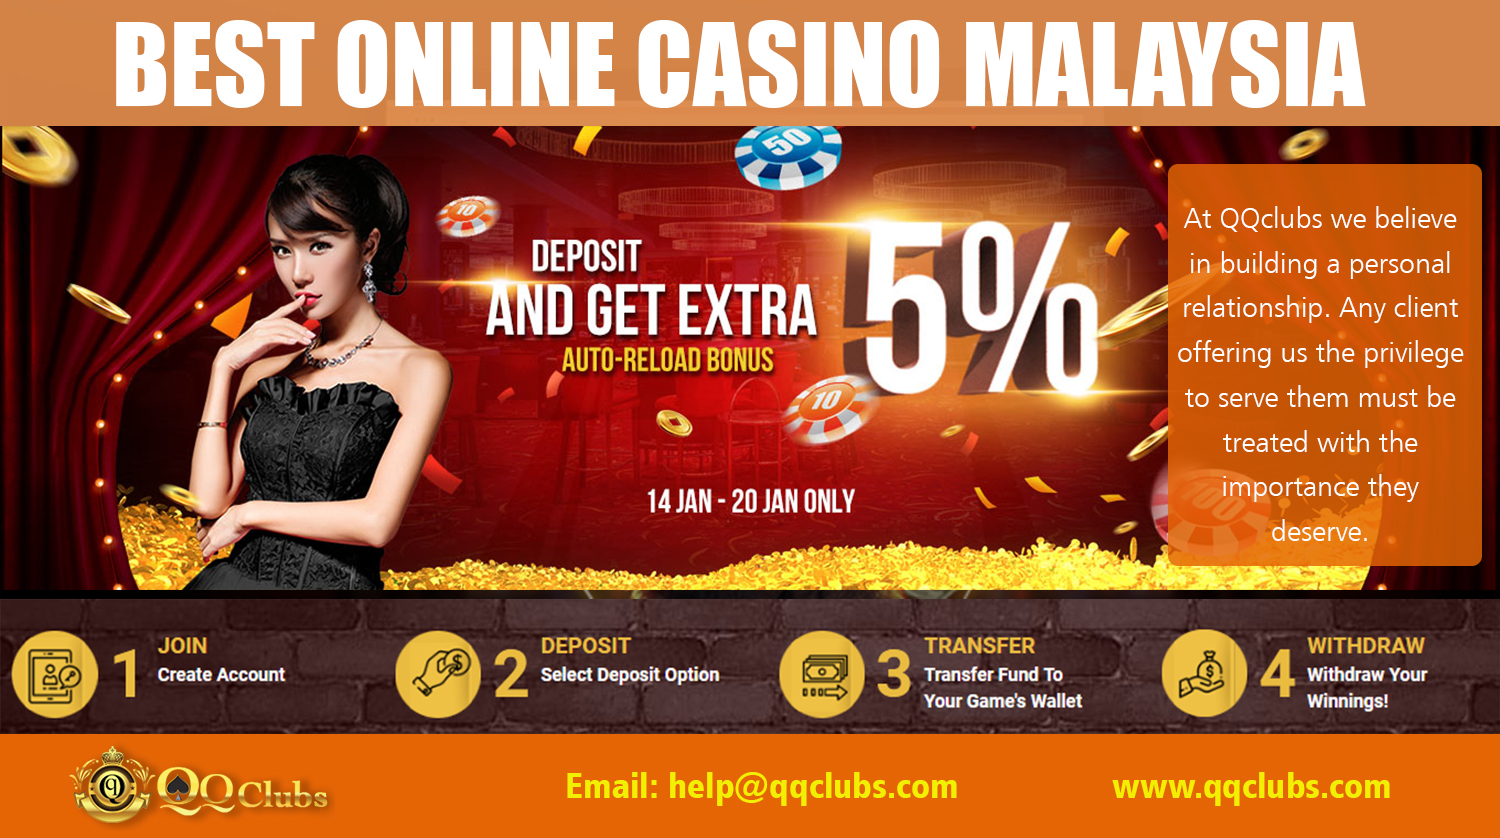 Best online casino malaysia inurl imgboard cgi ставки на спорт с высокой проходимостью бесплатно